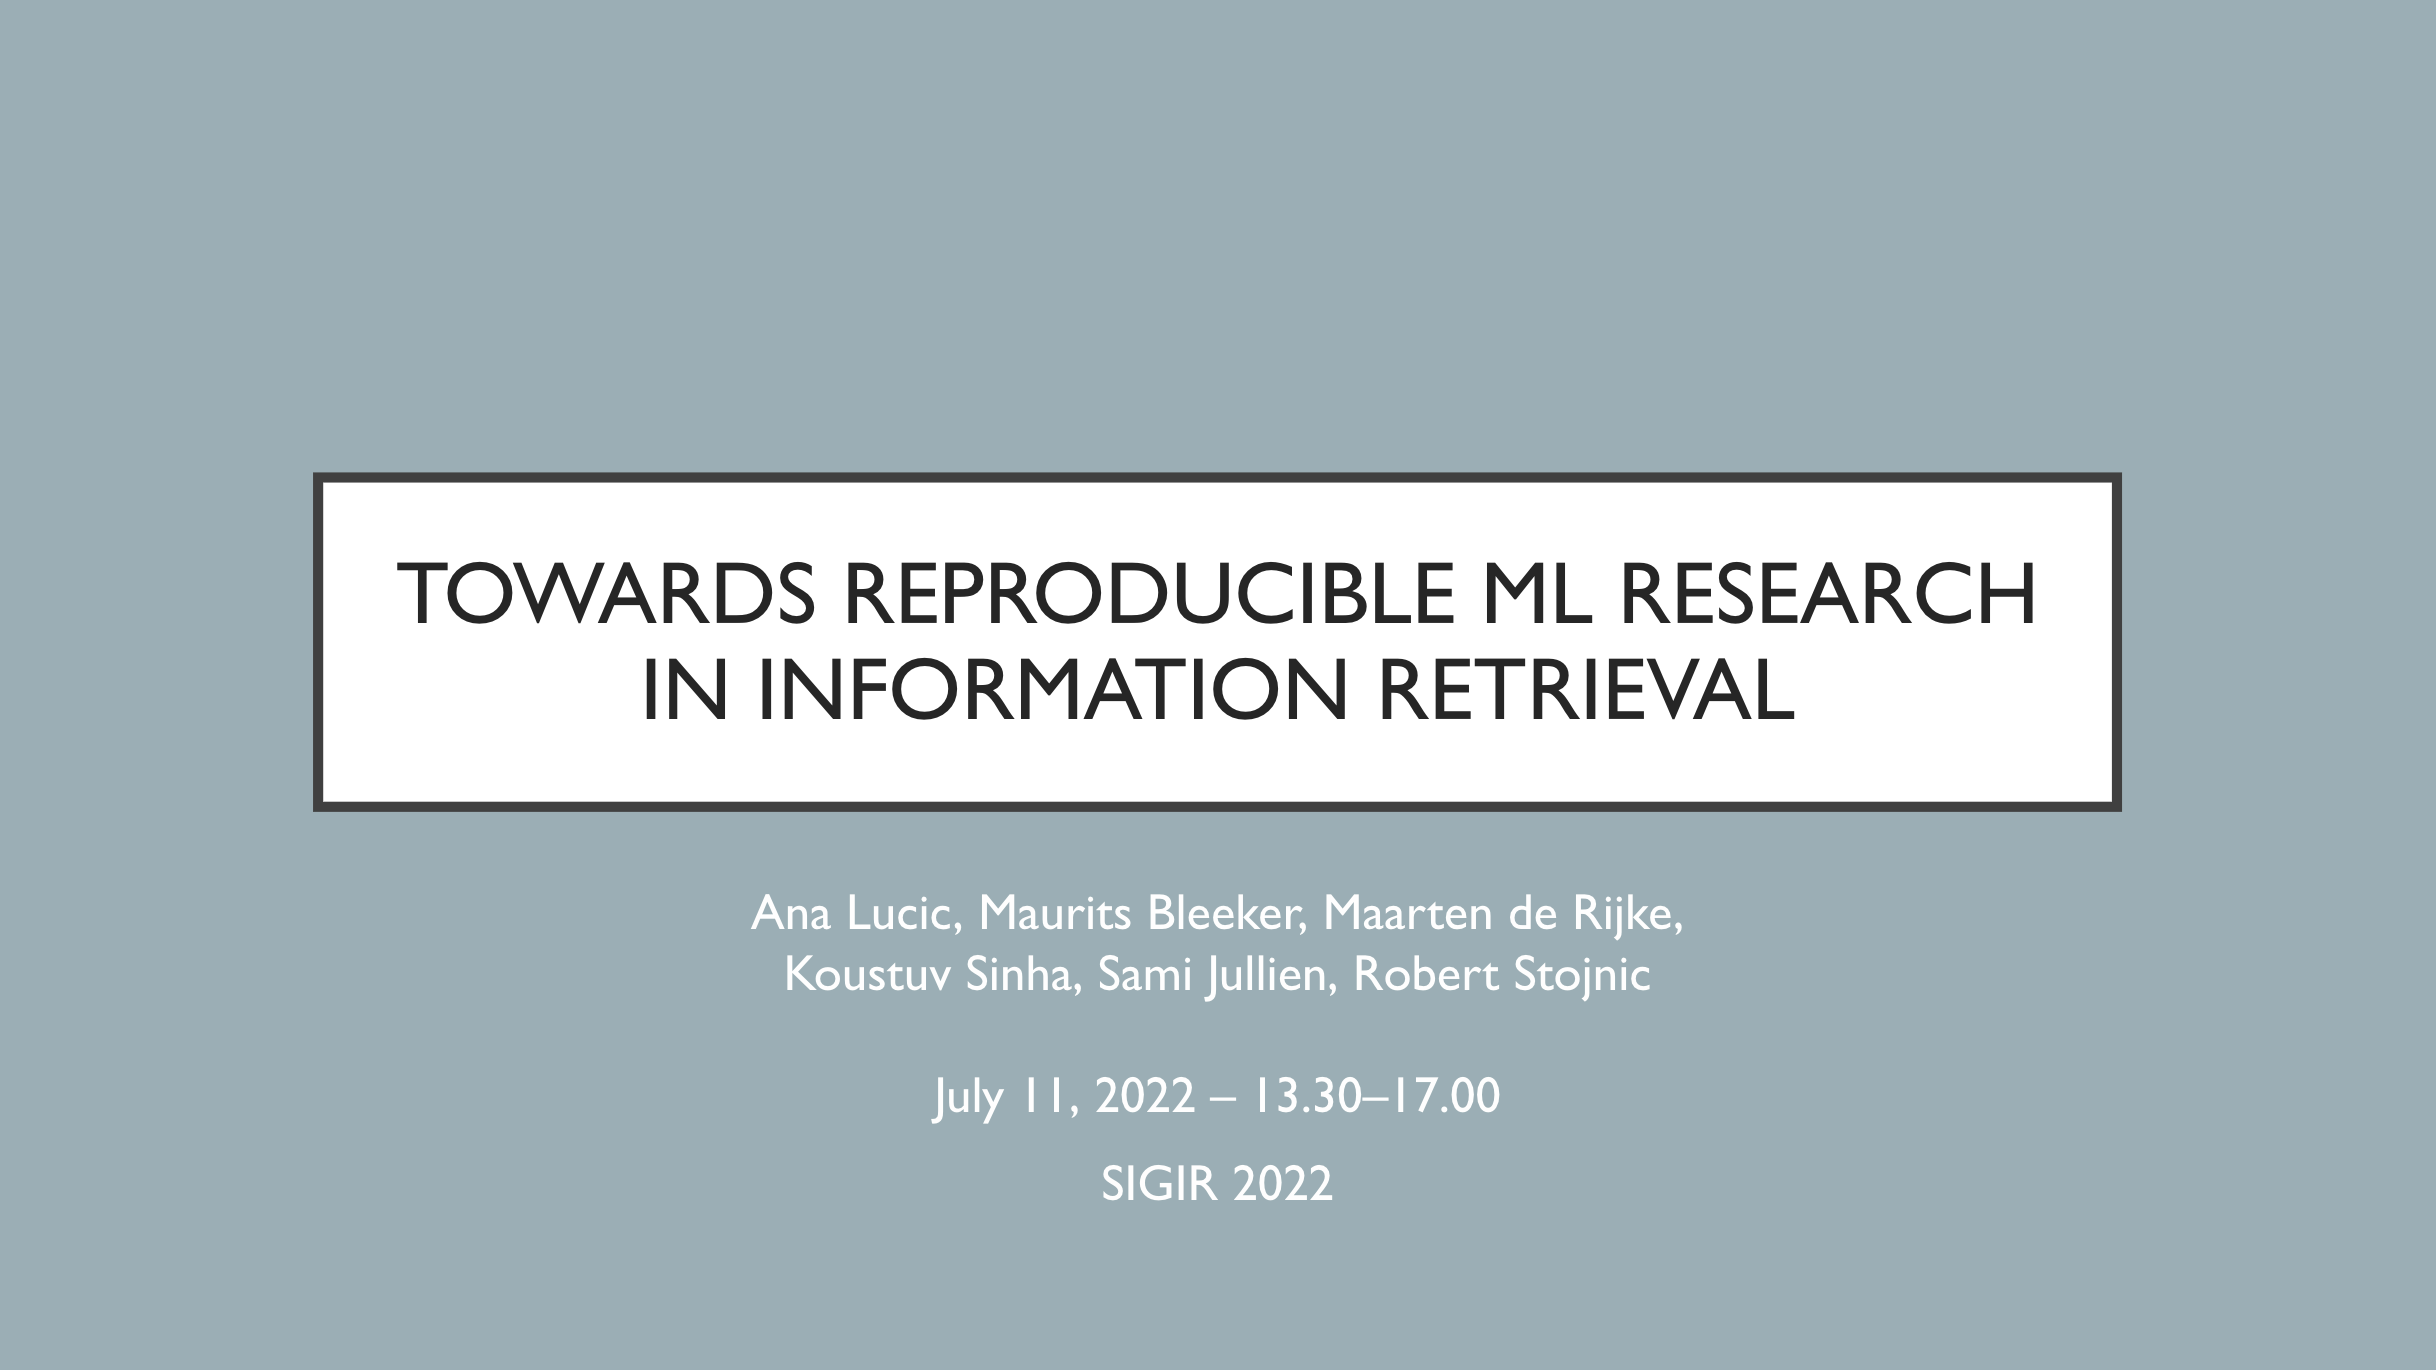 SIGIR 2022 Tutorial “Towards Reproducible ML Research in Information Retrieval”